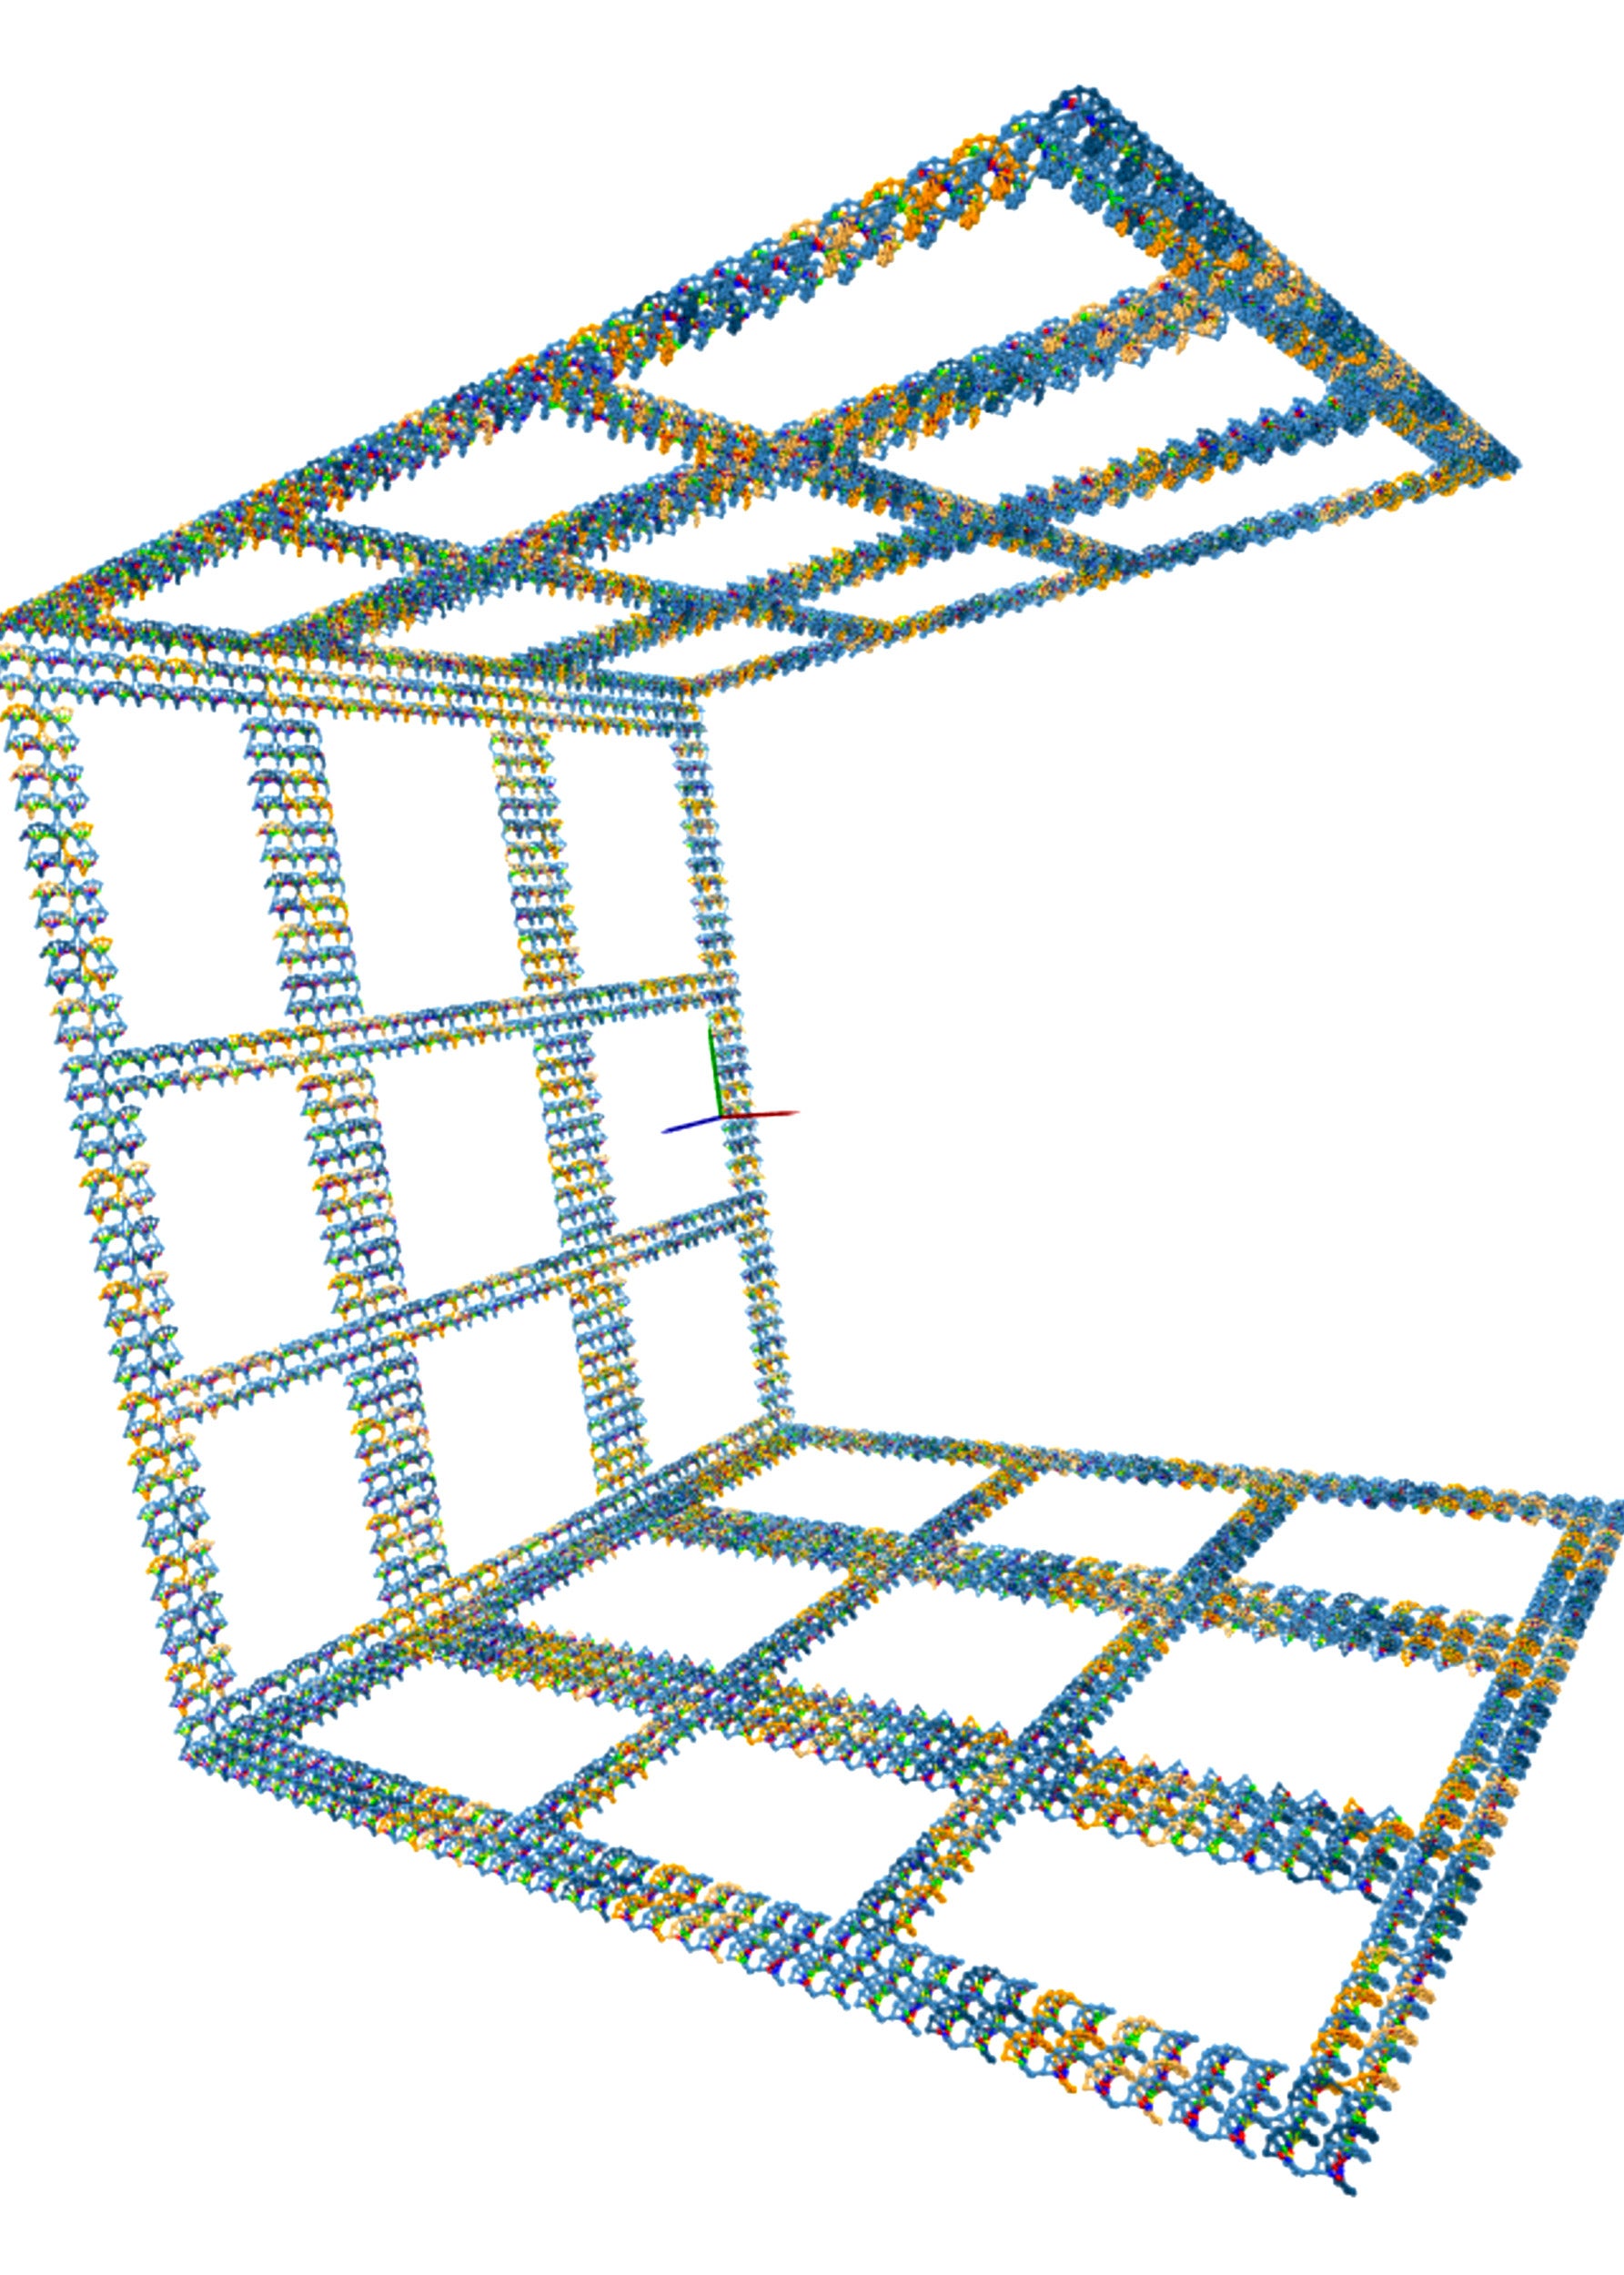 DNA origami graphic.